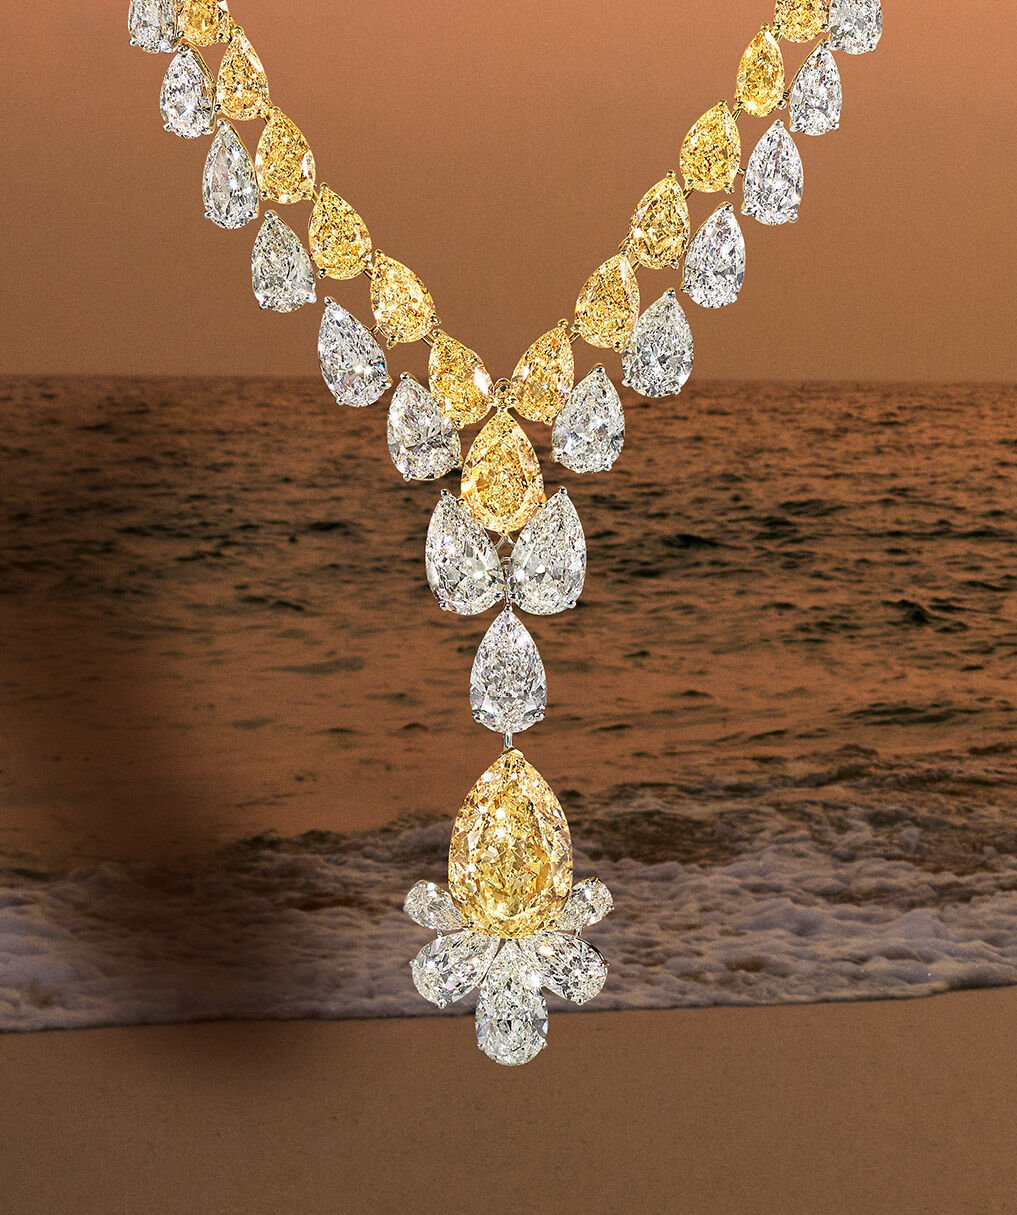 Graff yellow and white diamond high jewellery necklace